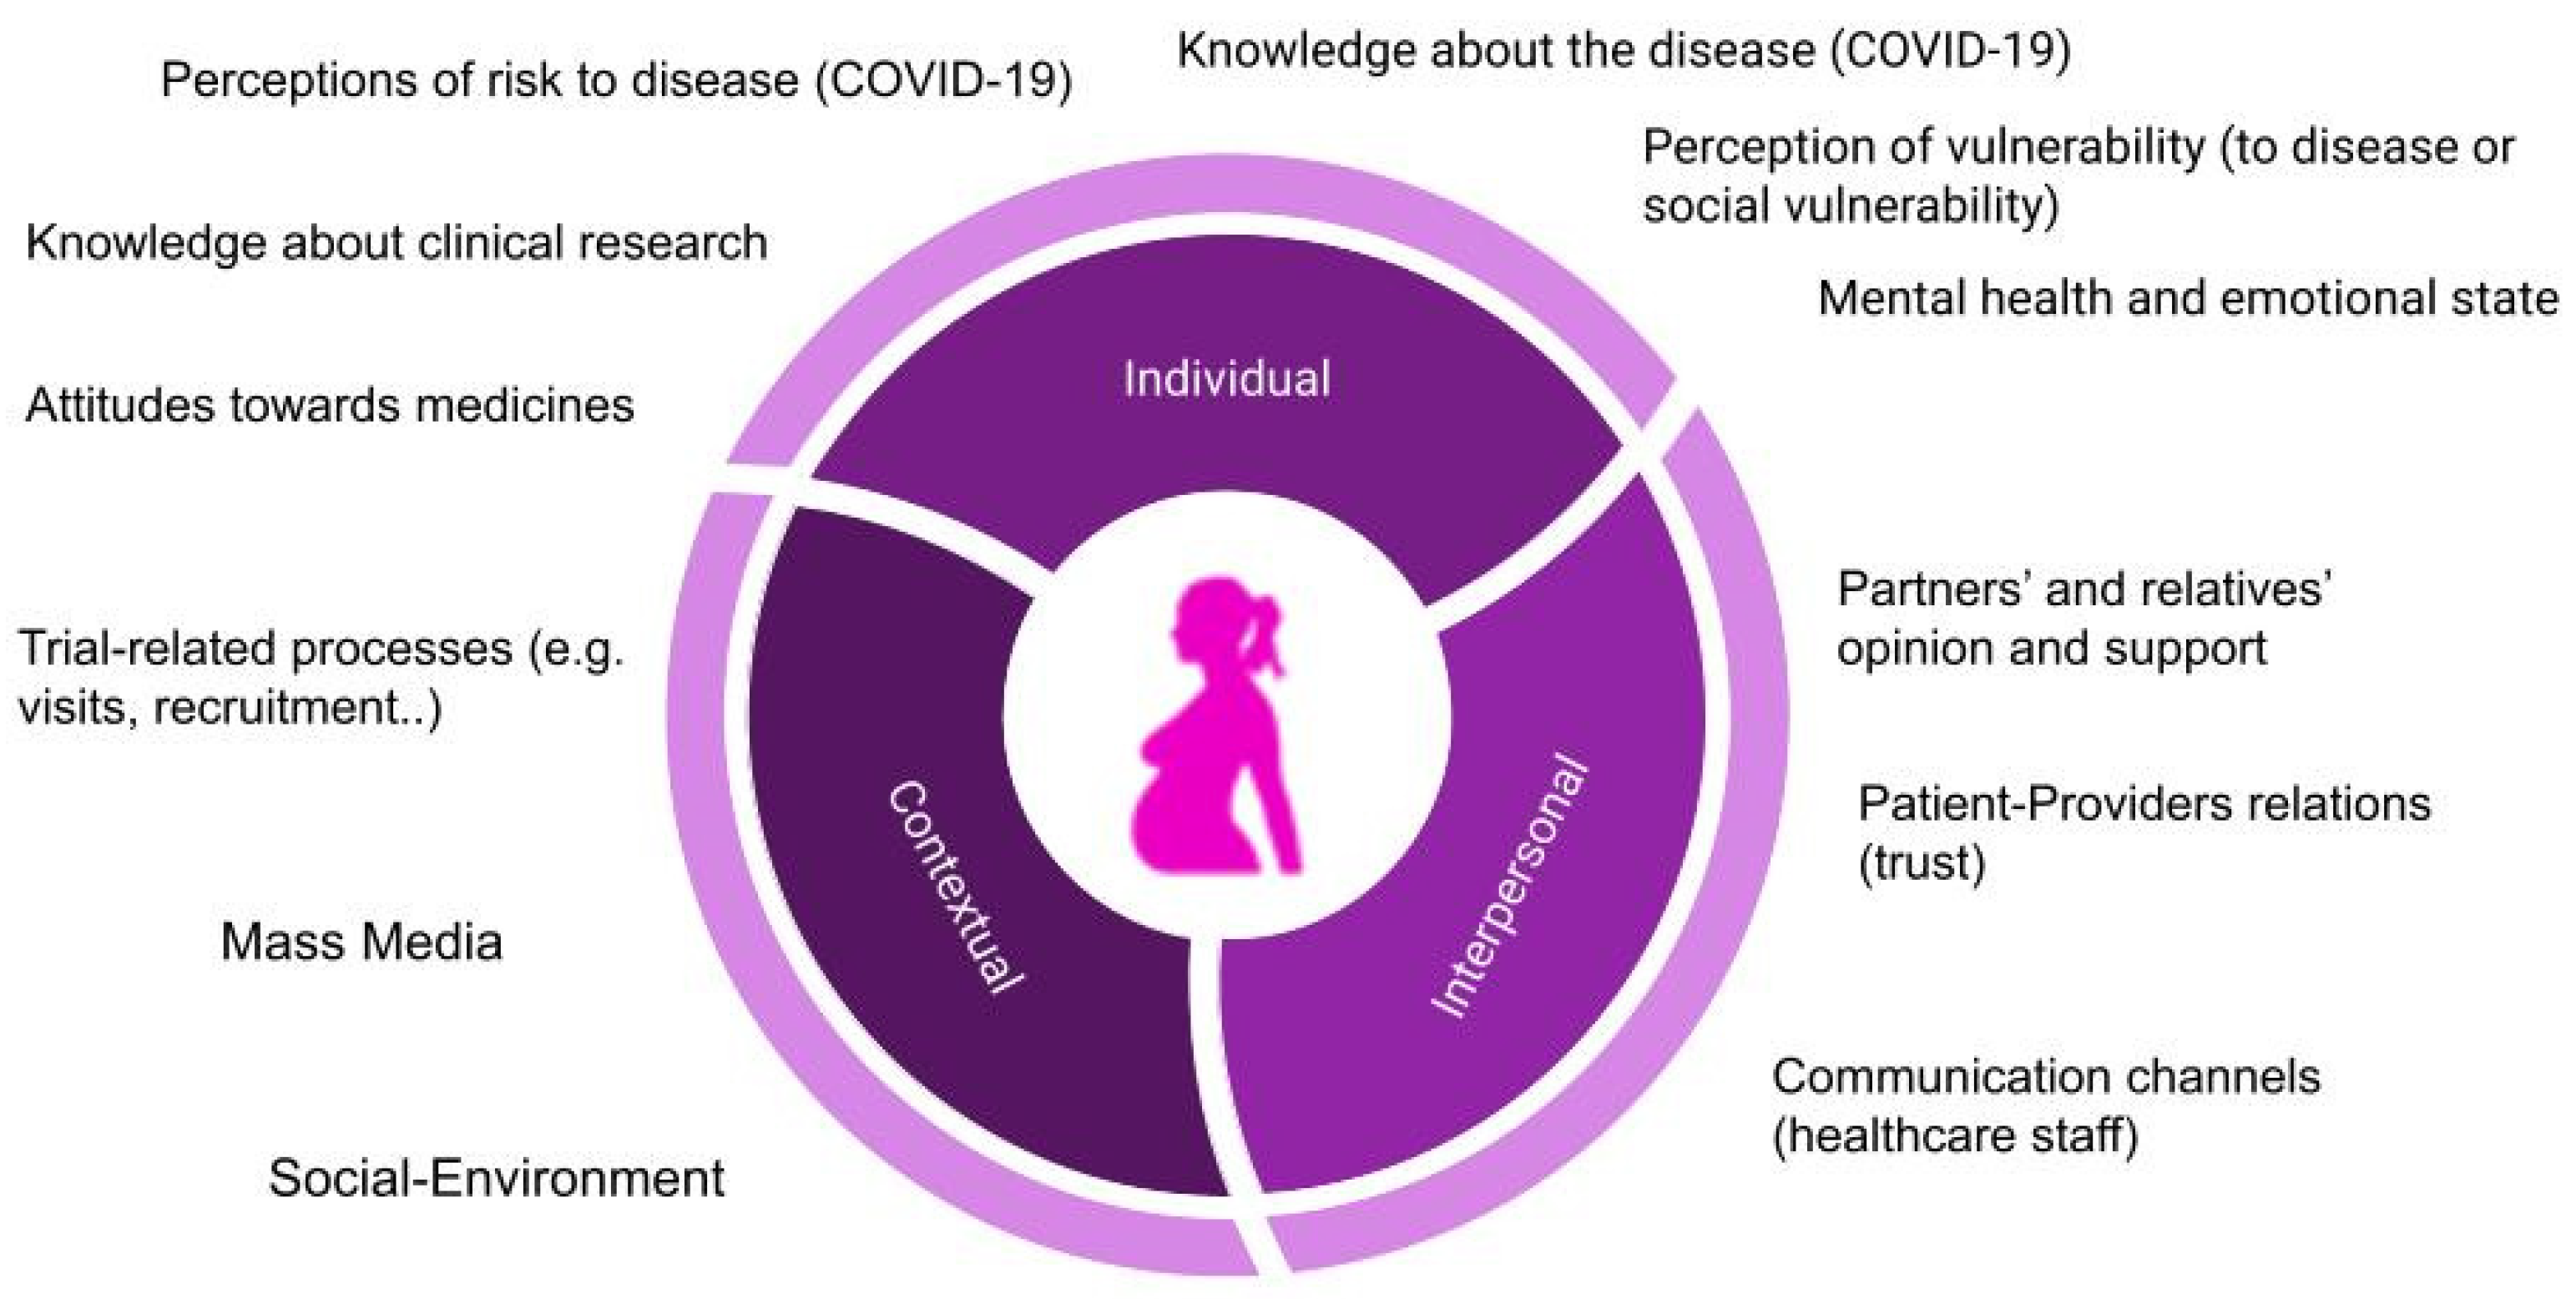 Covid-19 in Pregnancy; scientific studies